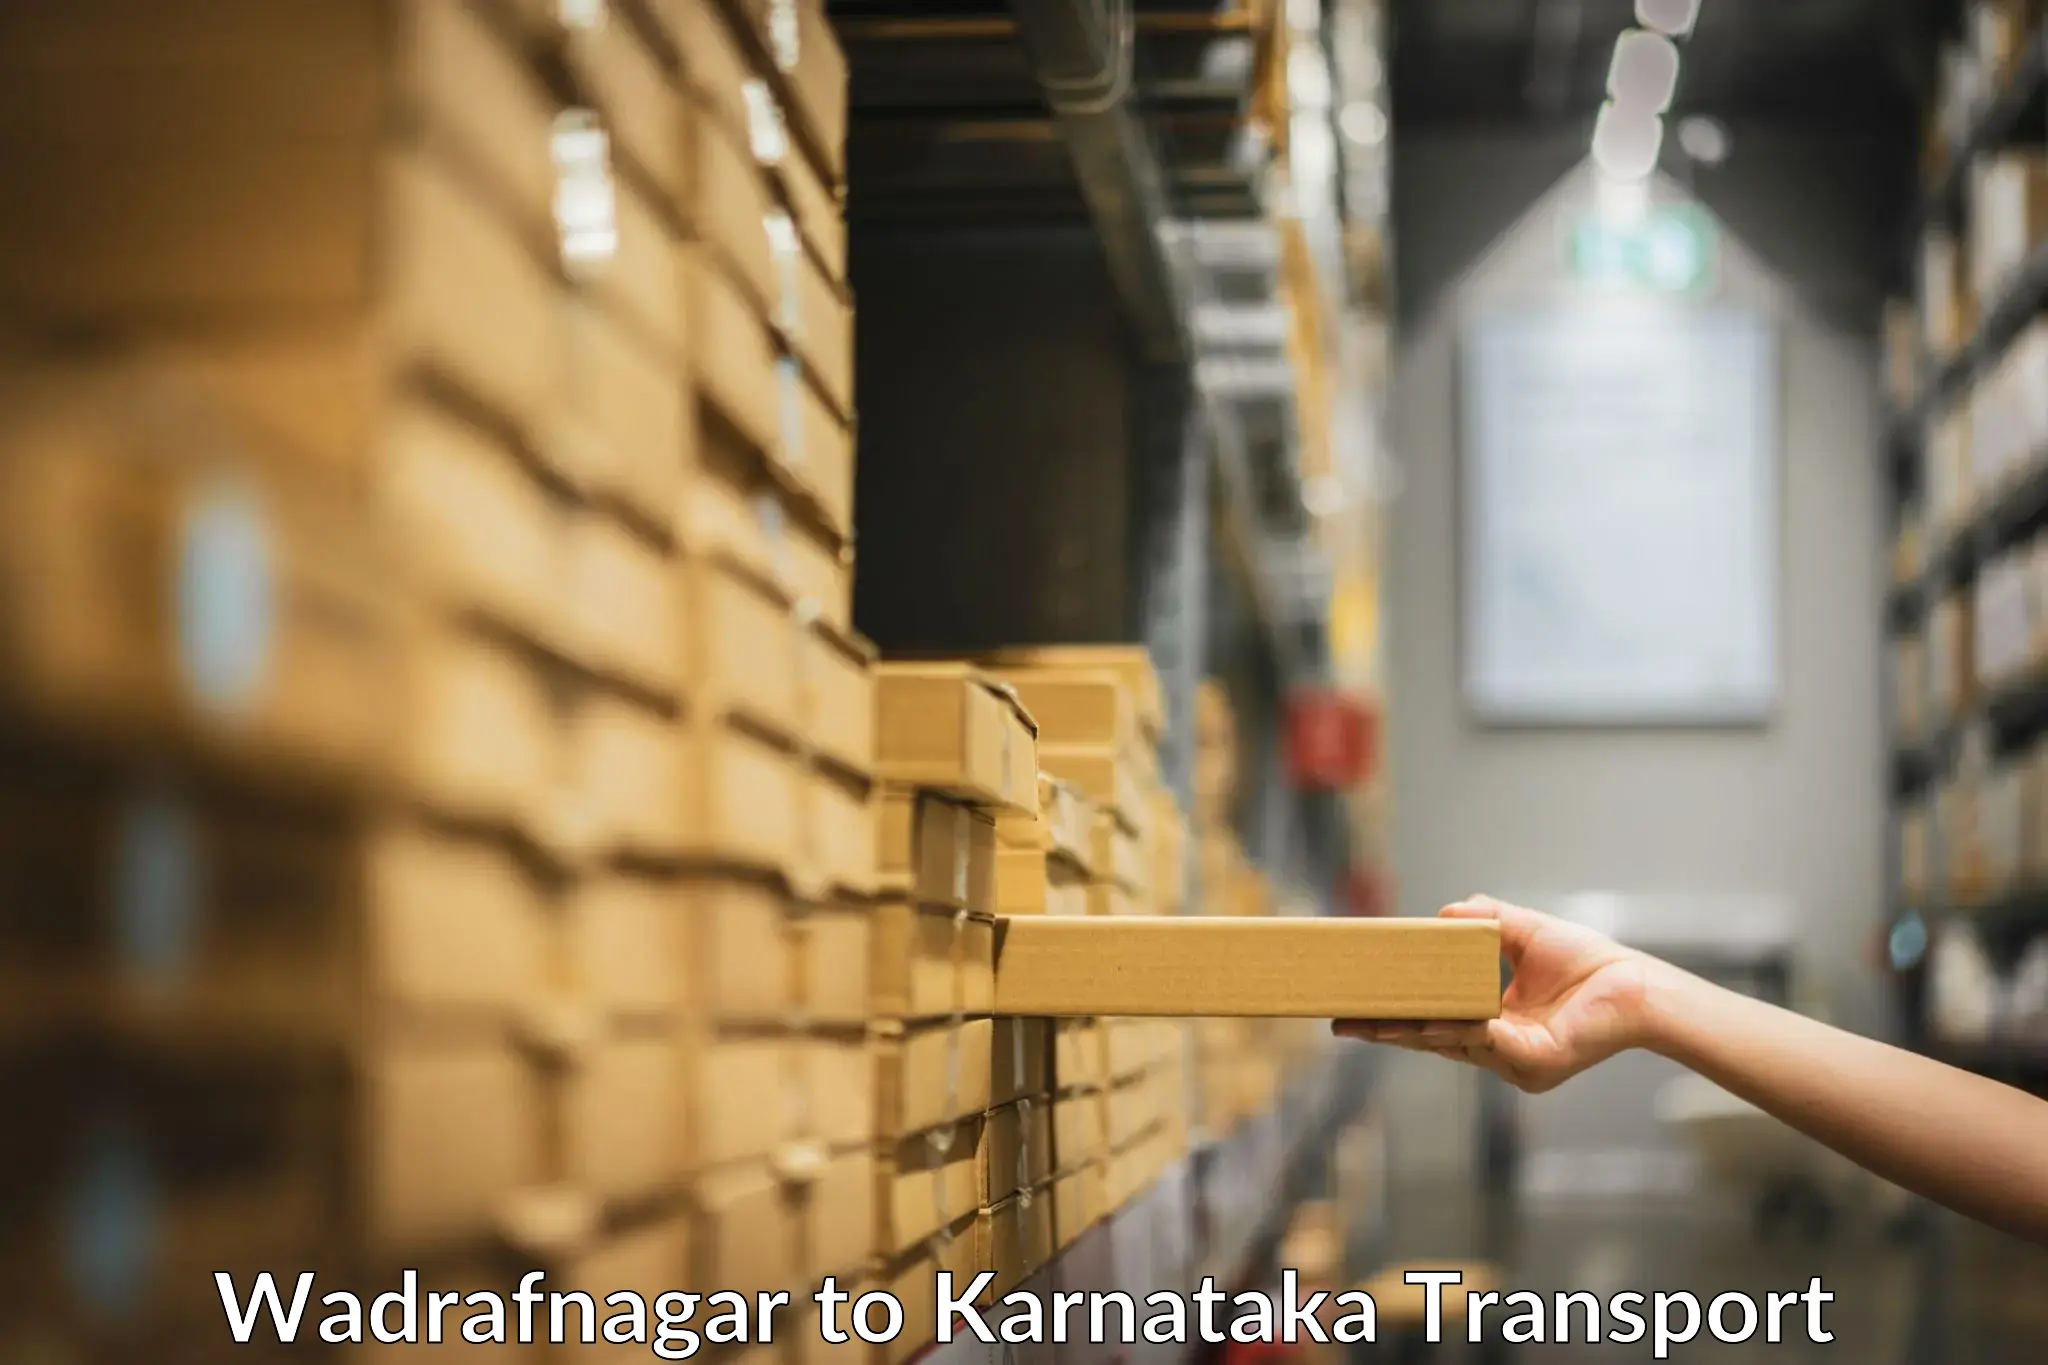 Truck transport companies in India Wadrafnagar to Dakshina Kannada